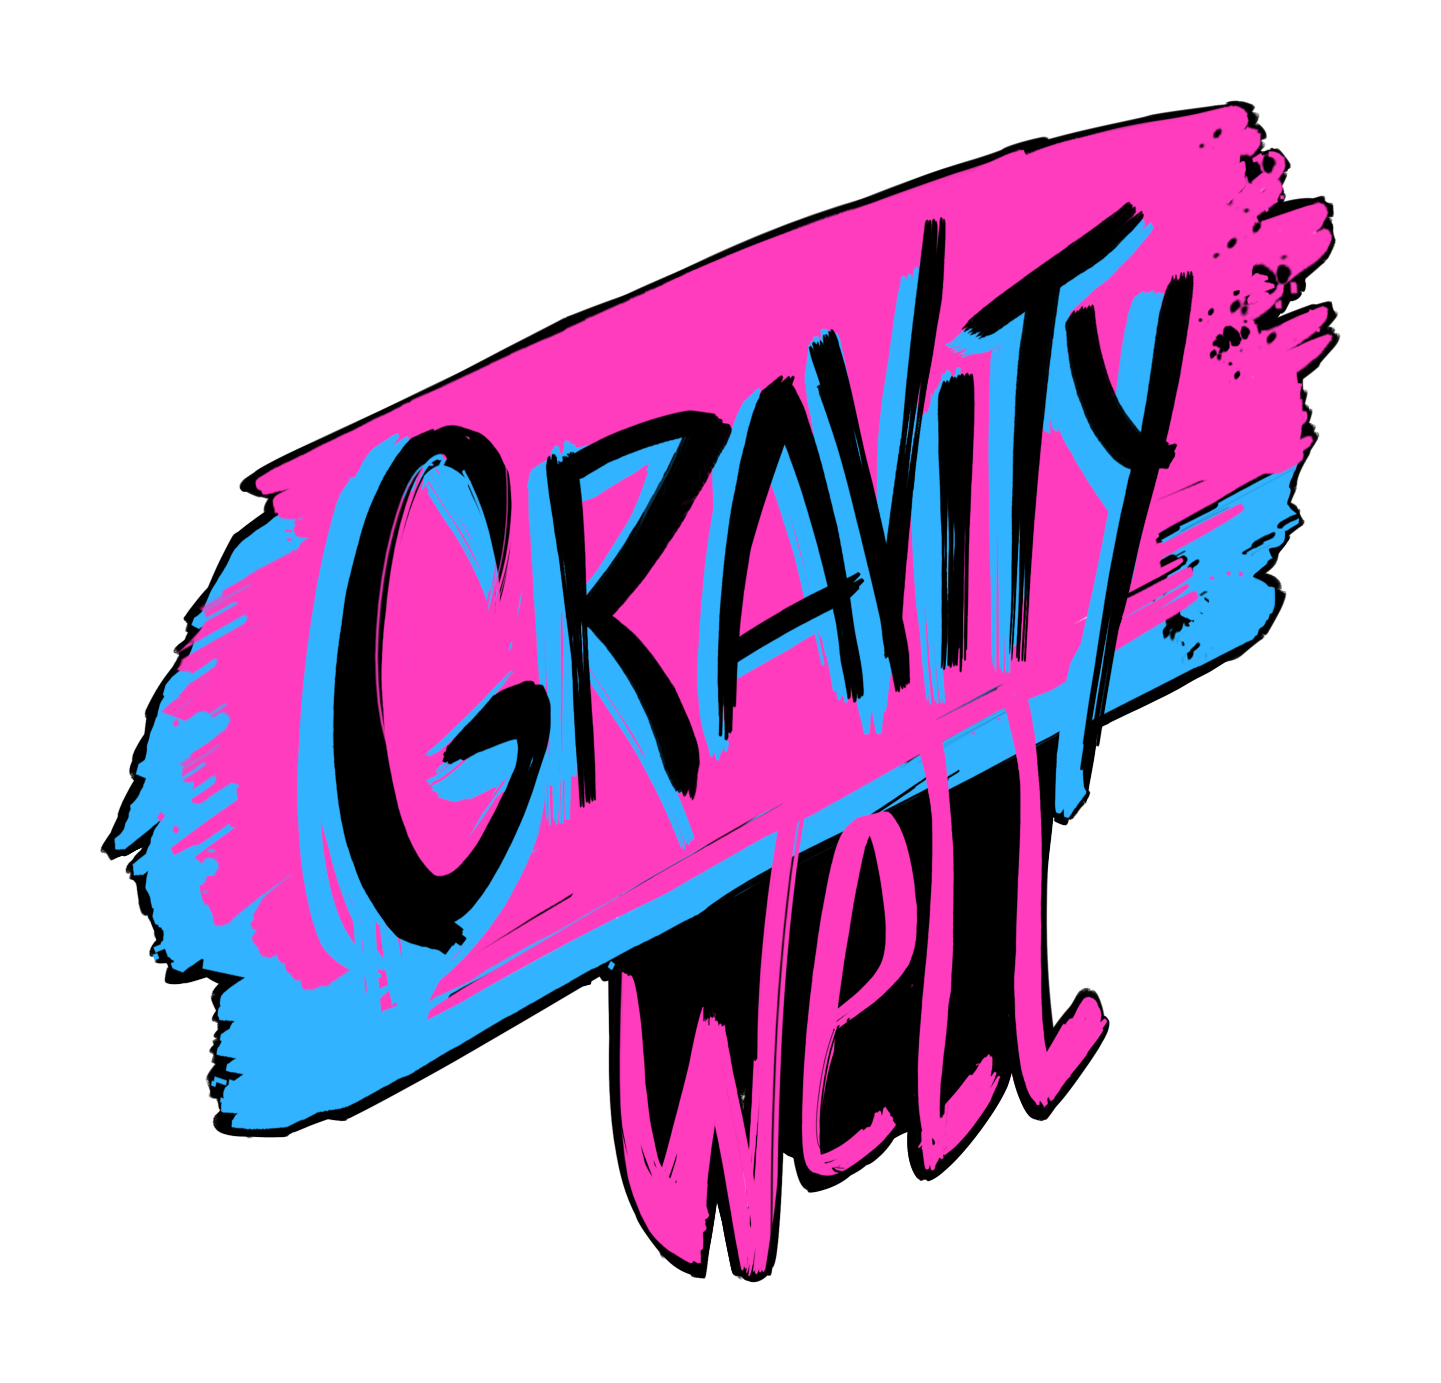 Gravity Well - Gematsu